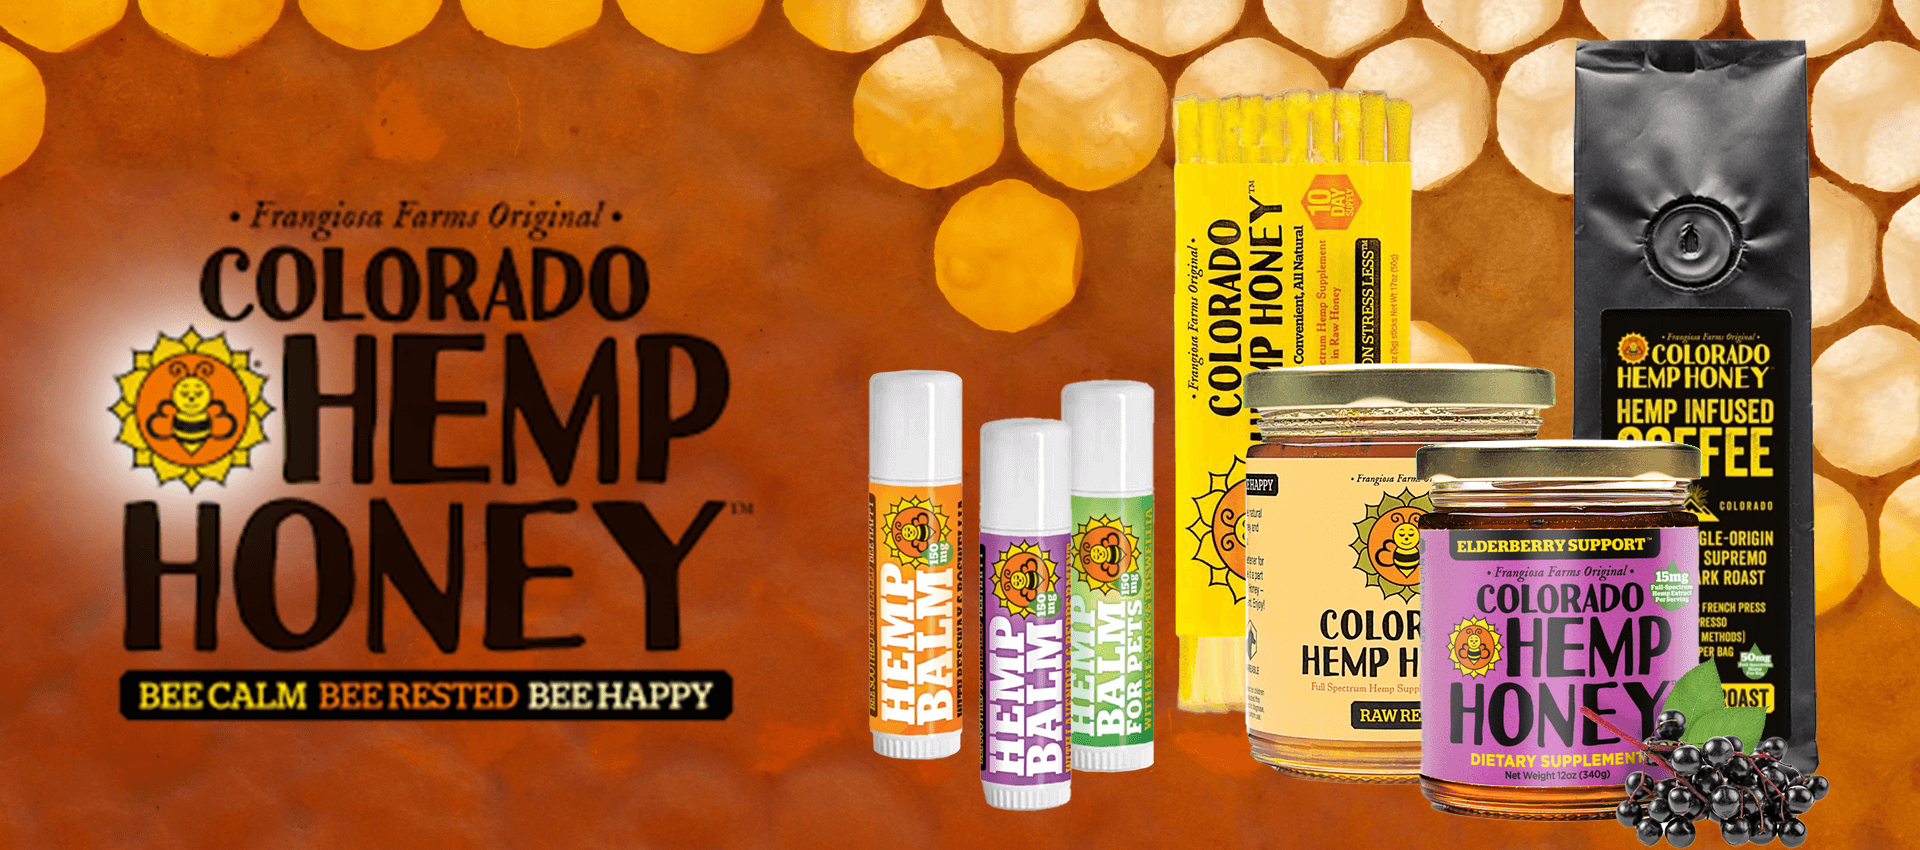 Colorado Hemp Honey All Products